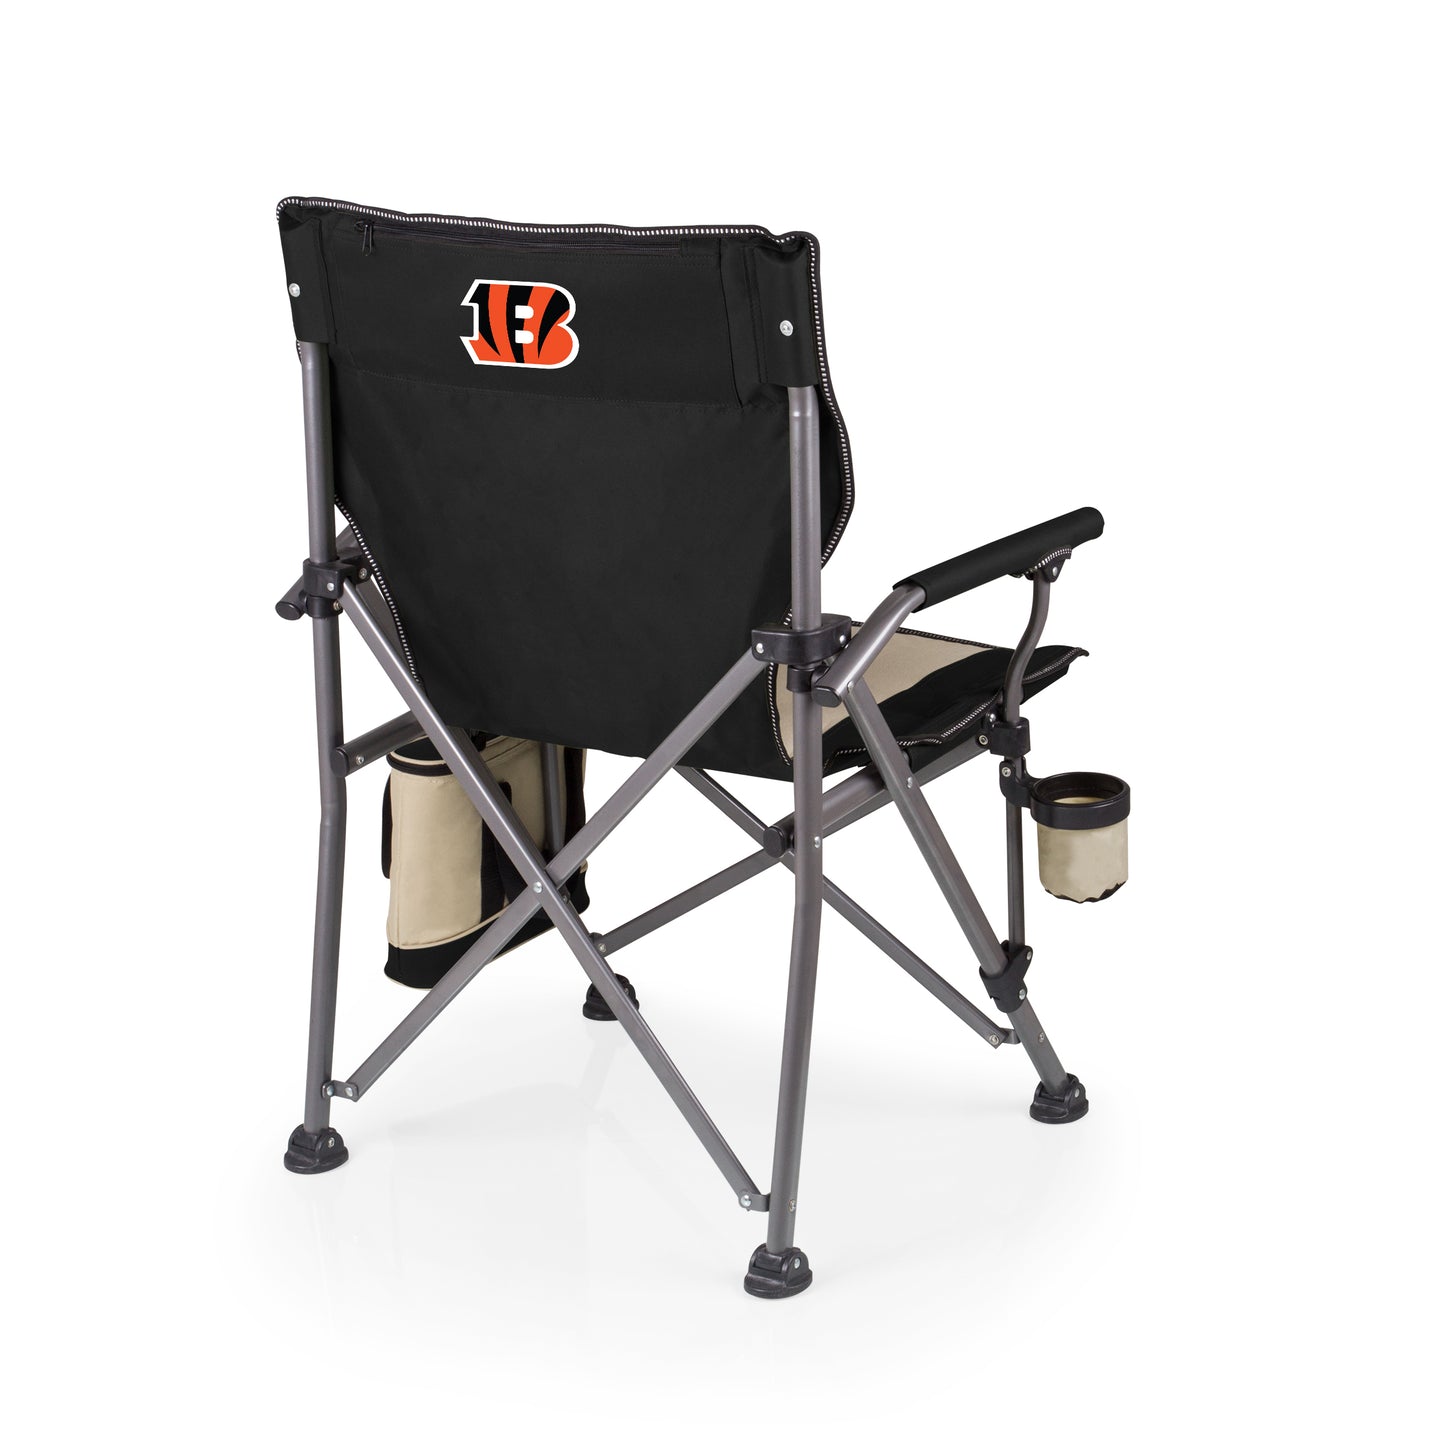 Cincinnati Bengals - Outlander Folding Camping Chair with Cooler